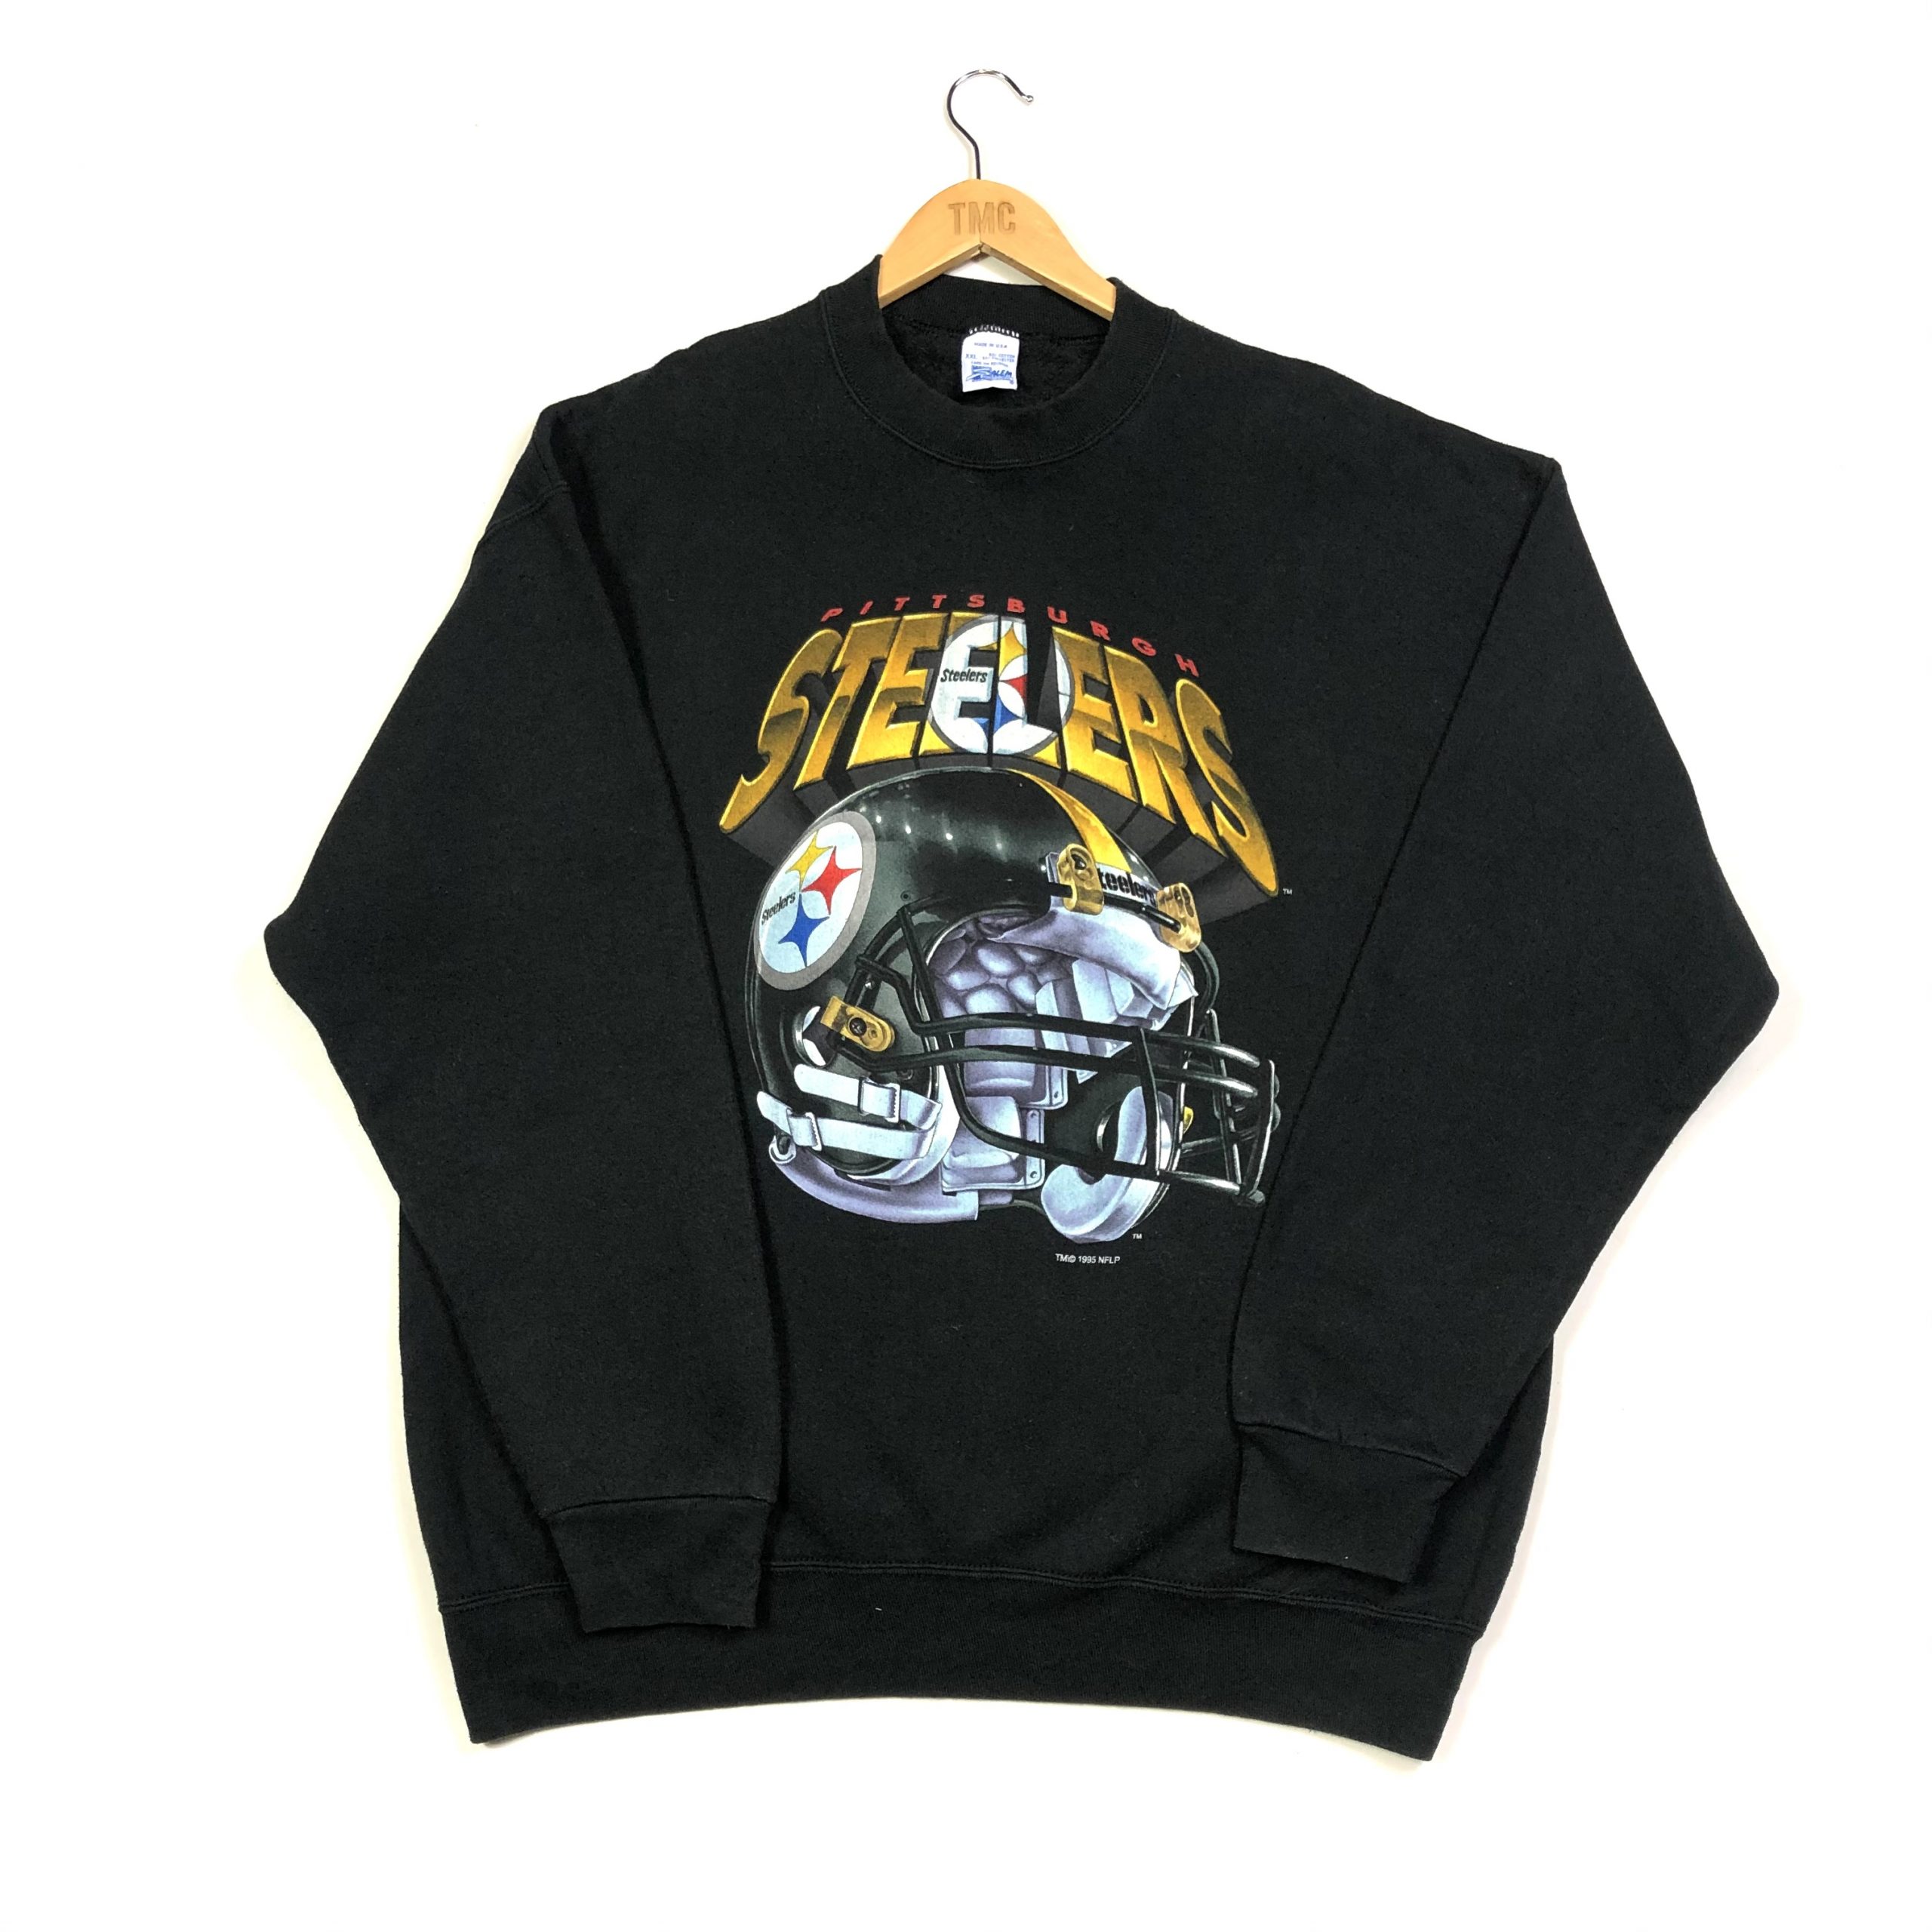 1995 NFL Steelers Sweatshirt - Black - XXL - TMC Vintage - Vintage Clothing